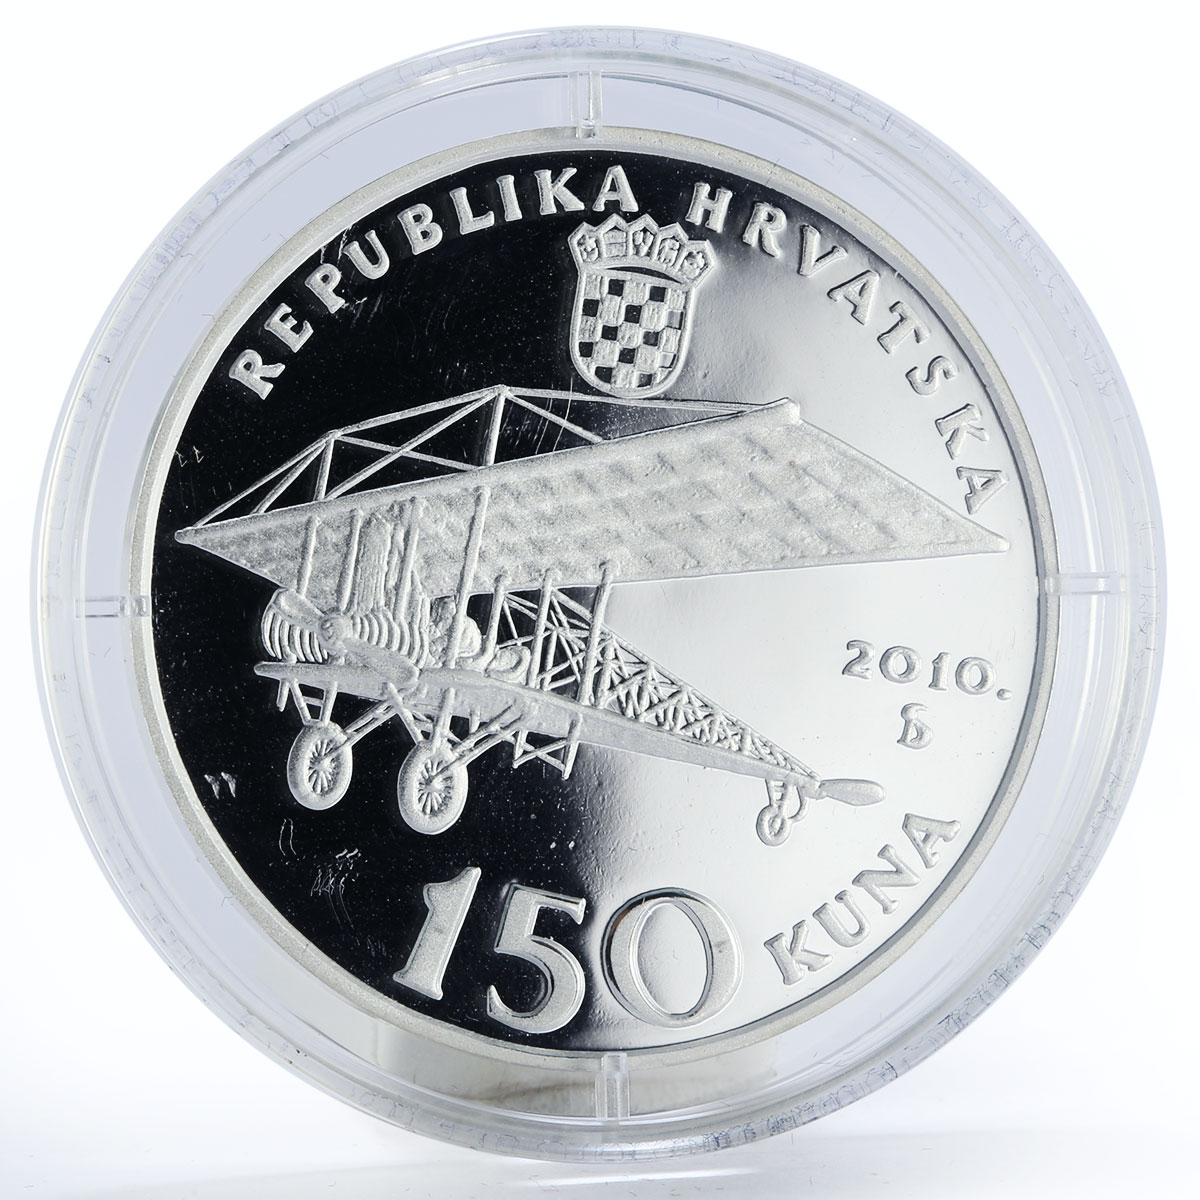 Croatia 150 kuna 100th Anniversary of Aviation in Croatia silver proof coin 2010